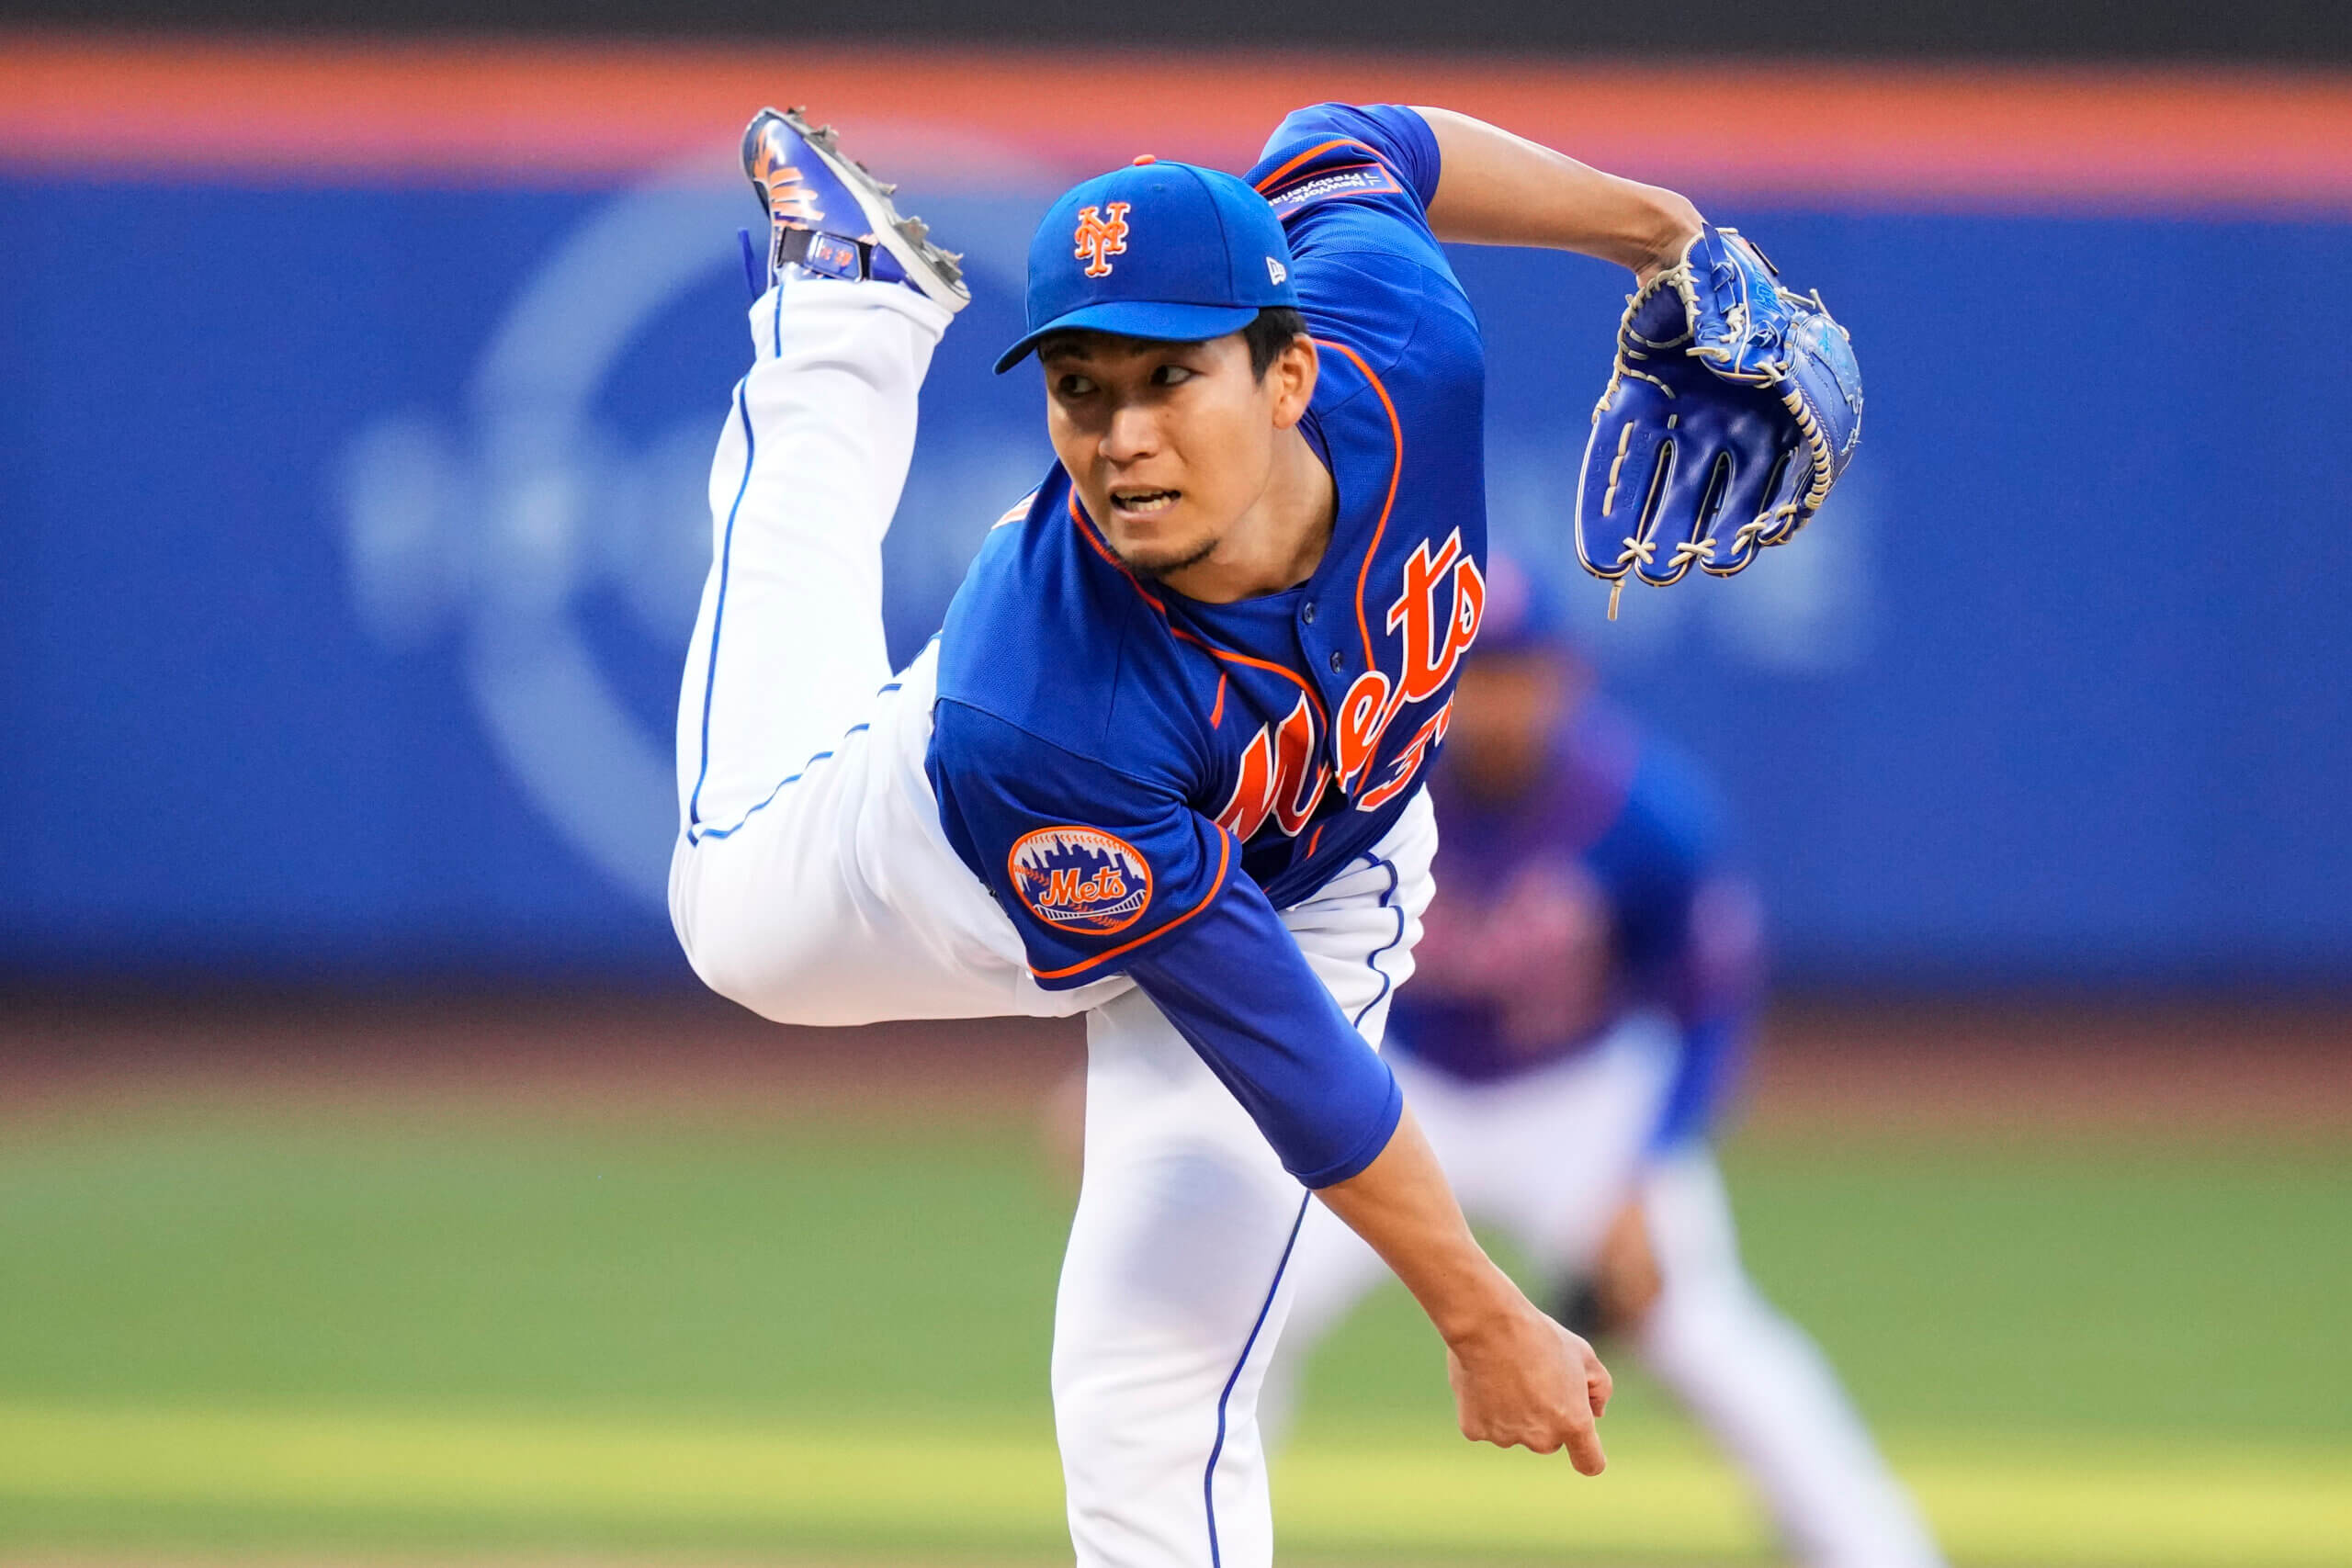 Baseball: Mets pitcher Kodai Senga earns 5th win with 7-inning gem